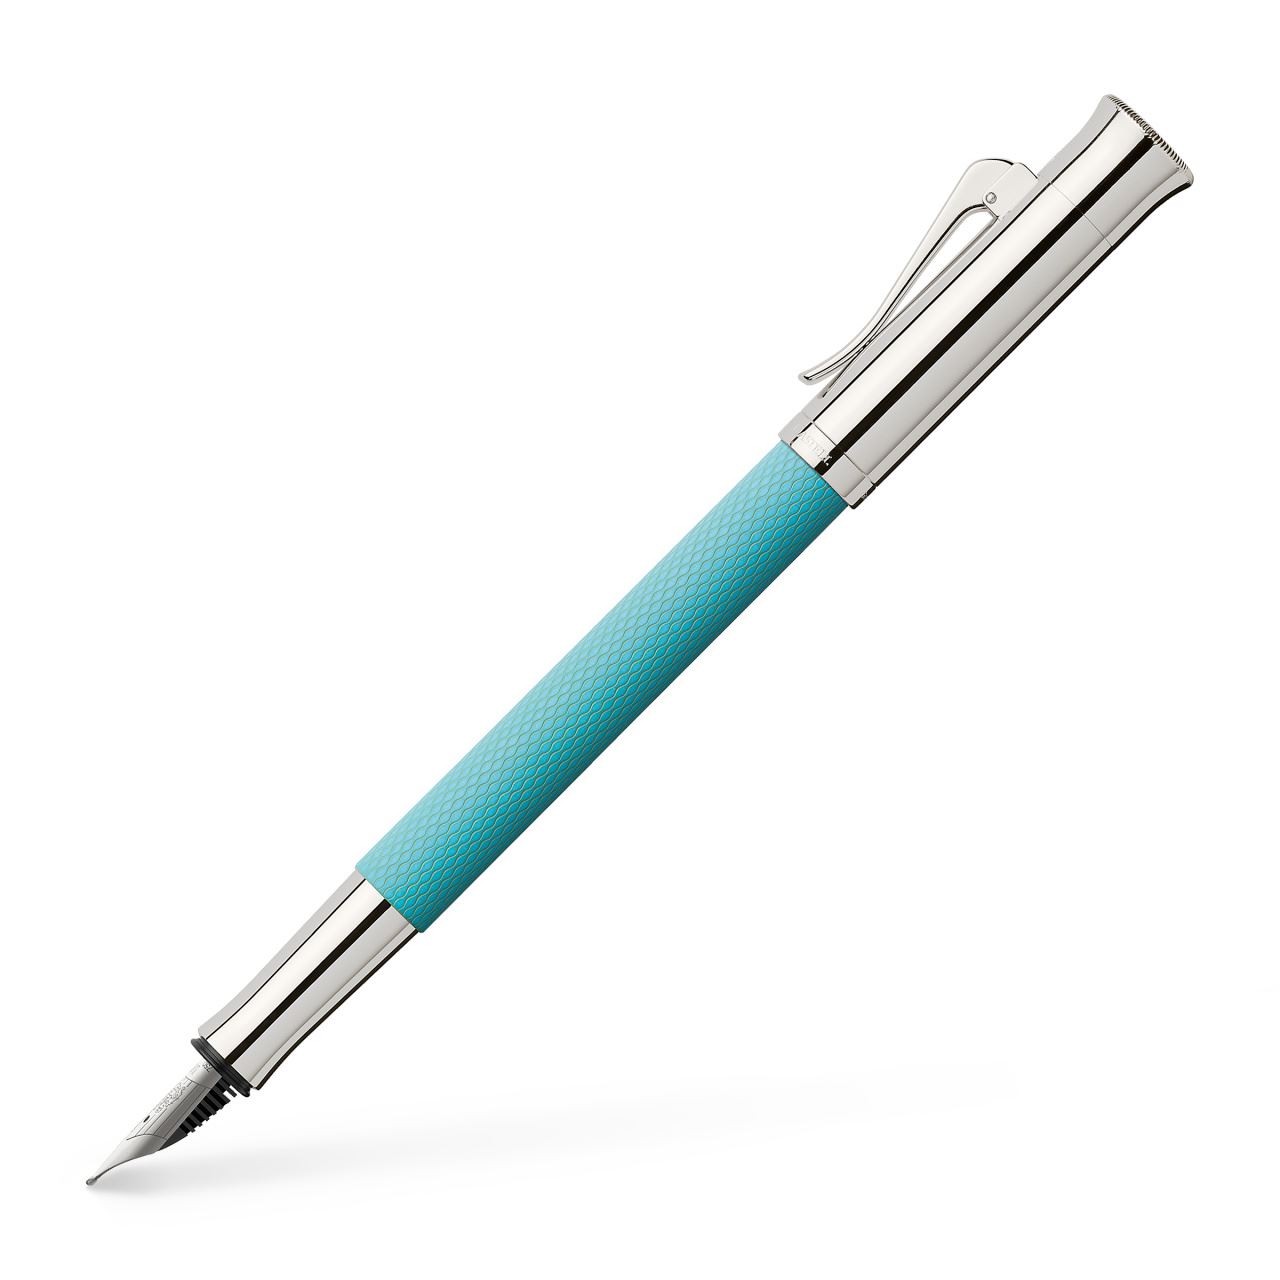 Graf-von-Faber-Castell - Fountain pen Guilloche Turquoise EF